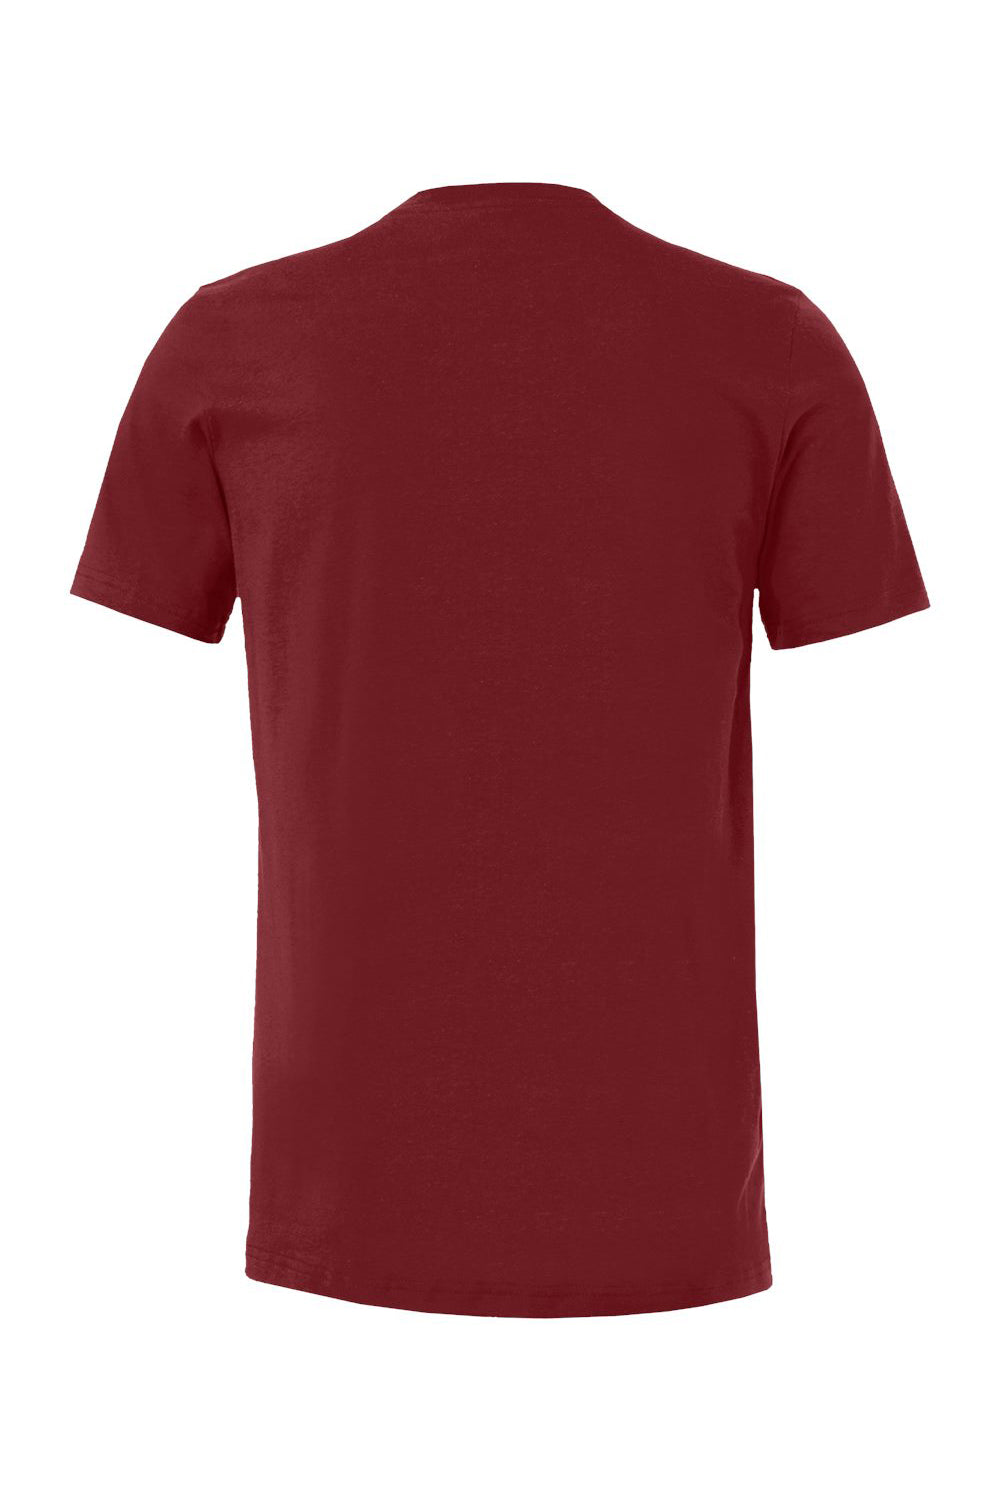 Bella + Canvas BC3001/3001C Mens Jersey Short Sleeve Crewneck T-Shirt Cardinal Red Flat Back